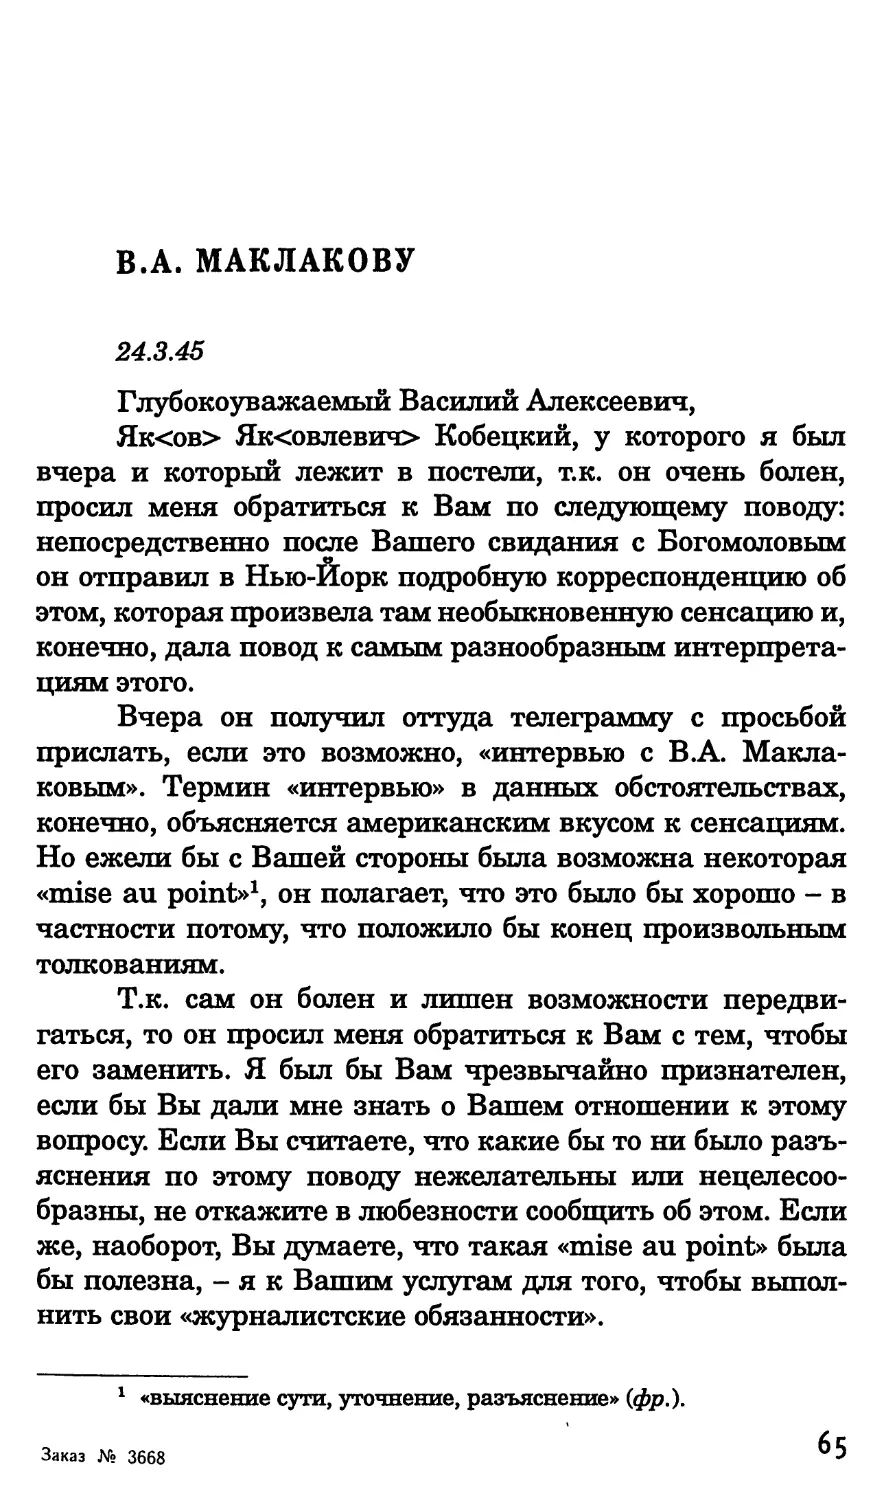 B.А. Маклакову. 24 марта 1945 г.